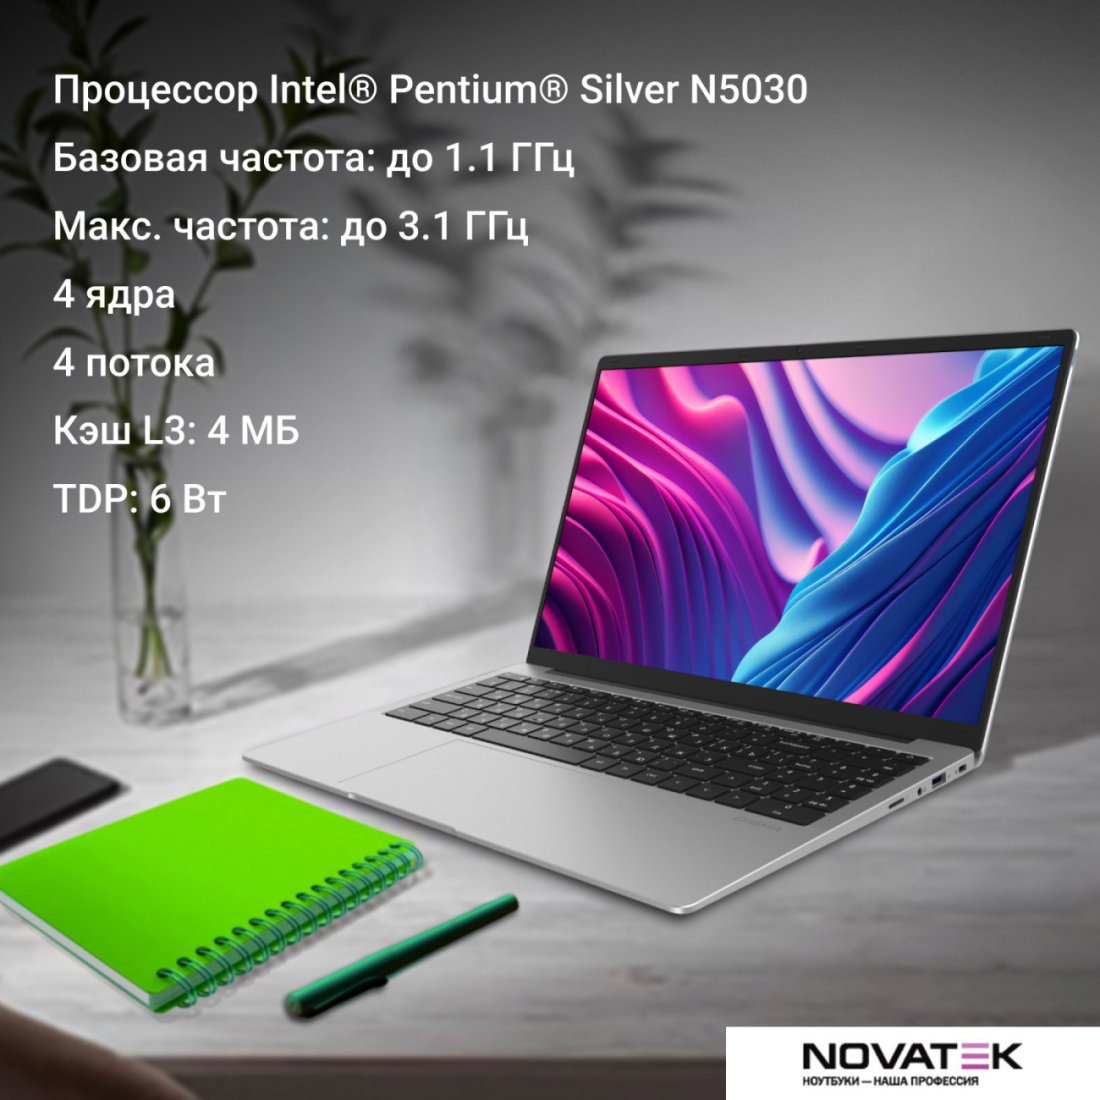 Ноутбук Digma EVE P5851 DN15N5-8CXW05